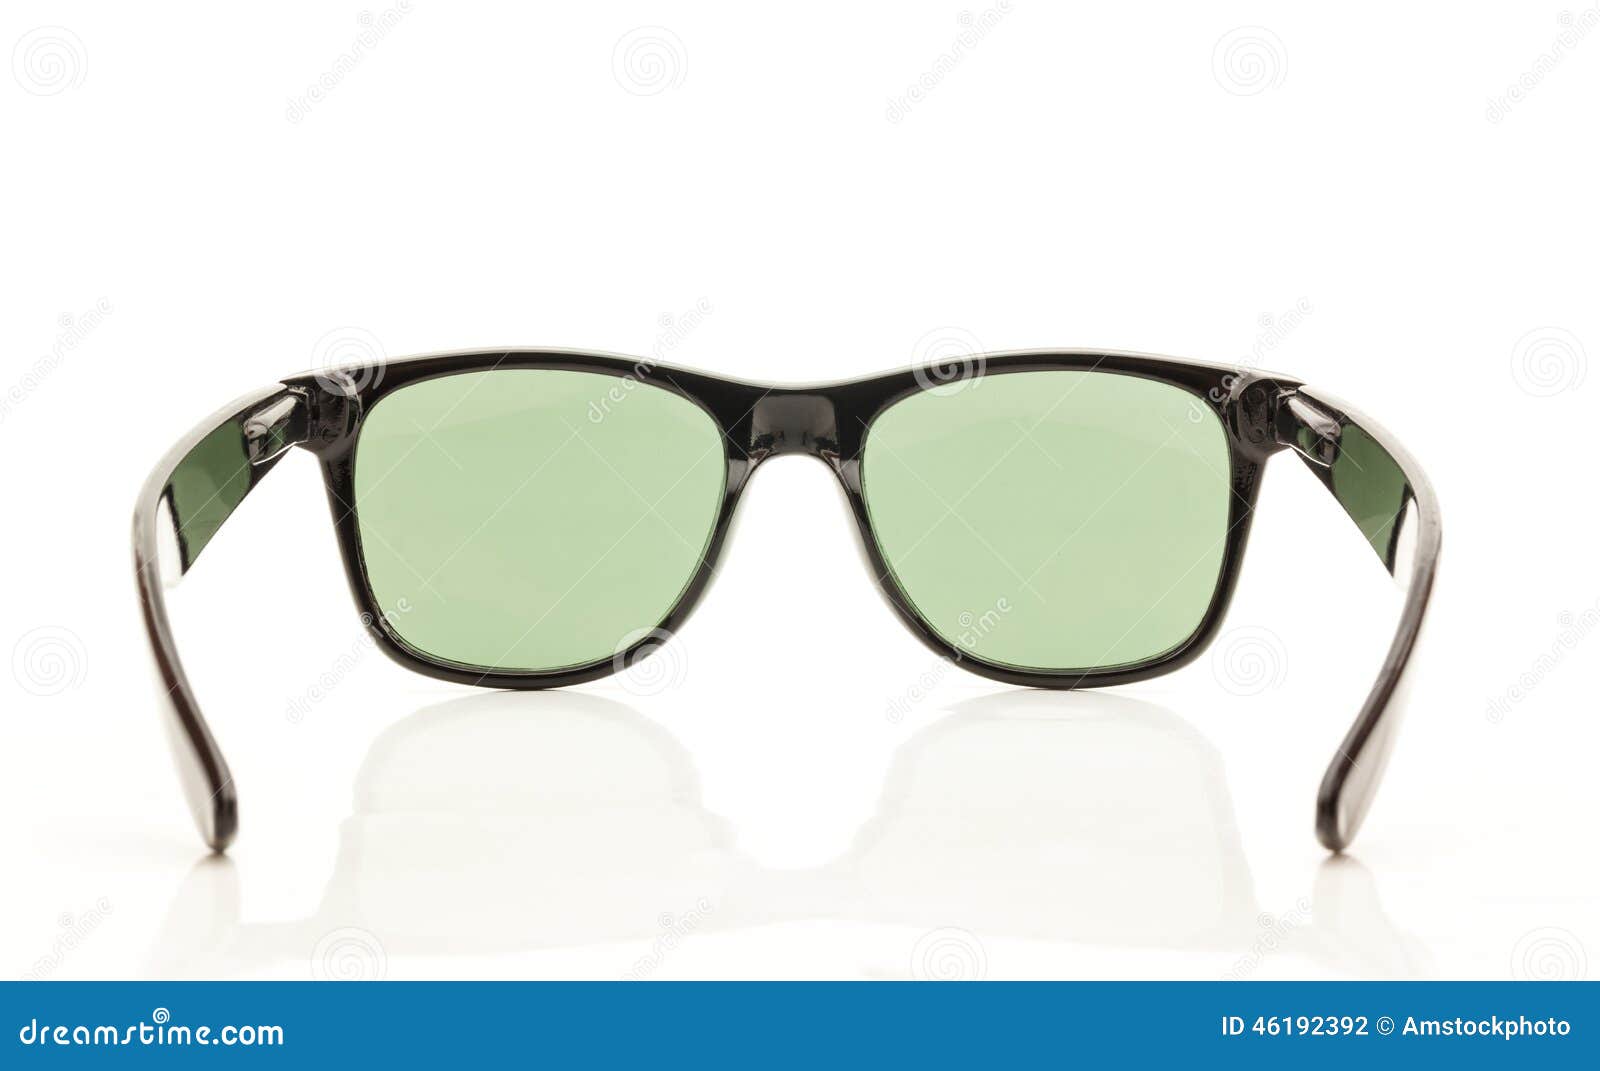 Back View Of Black Sunglasses Stock Photo - Image: 46192392